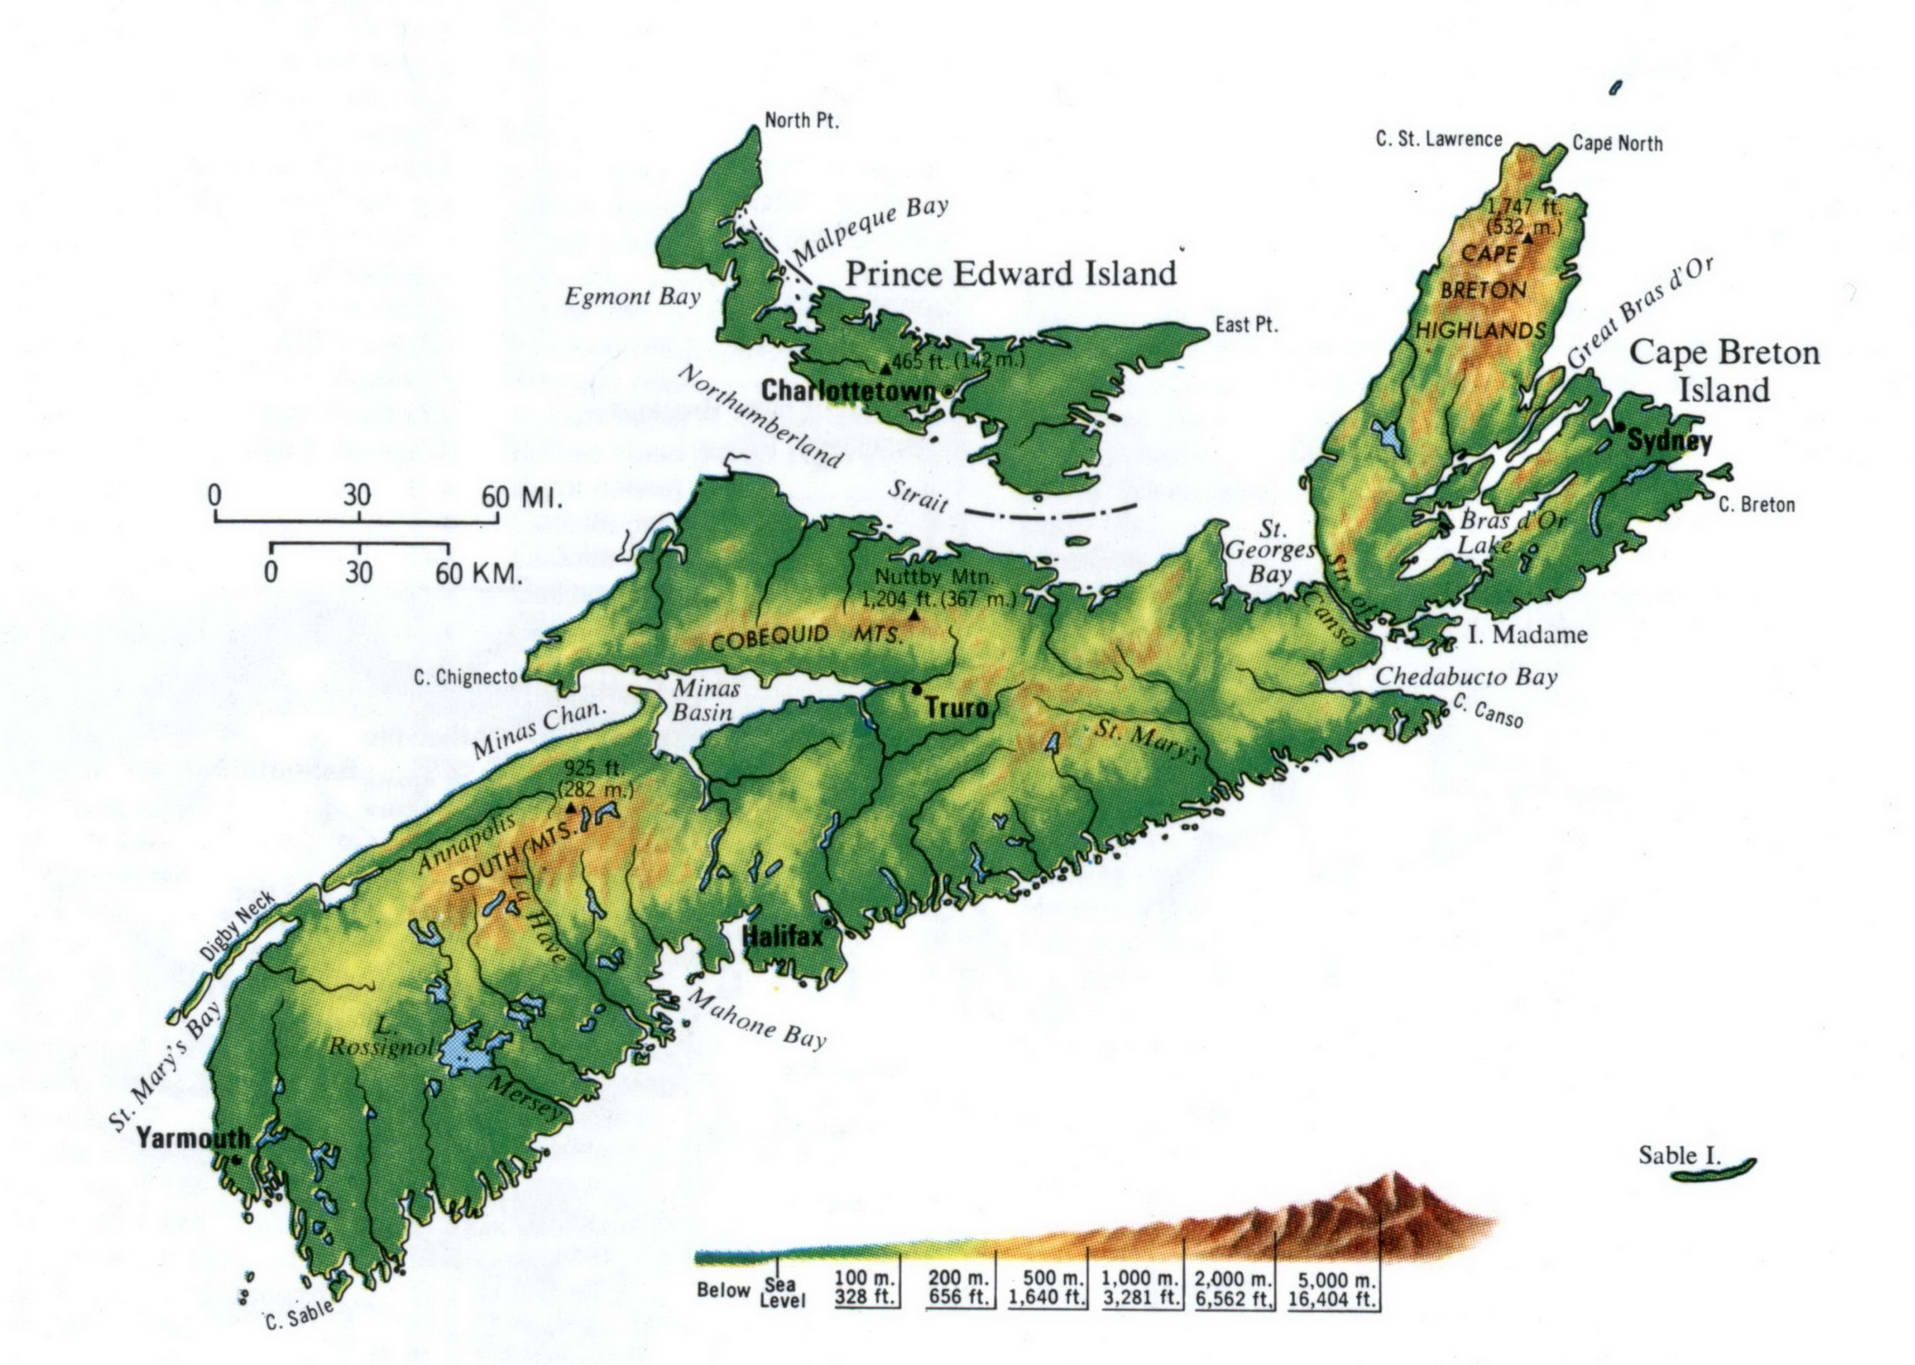 Topographical map of Nova Scotia